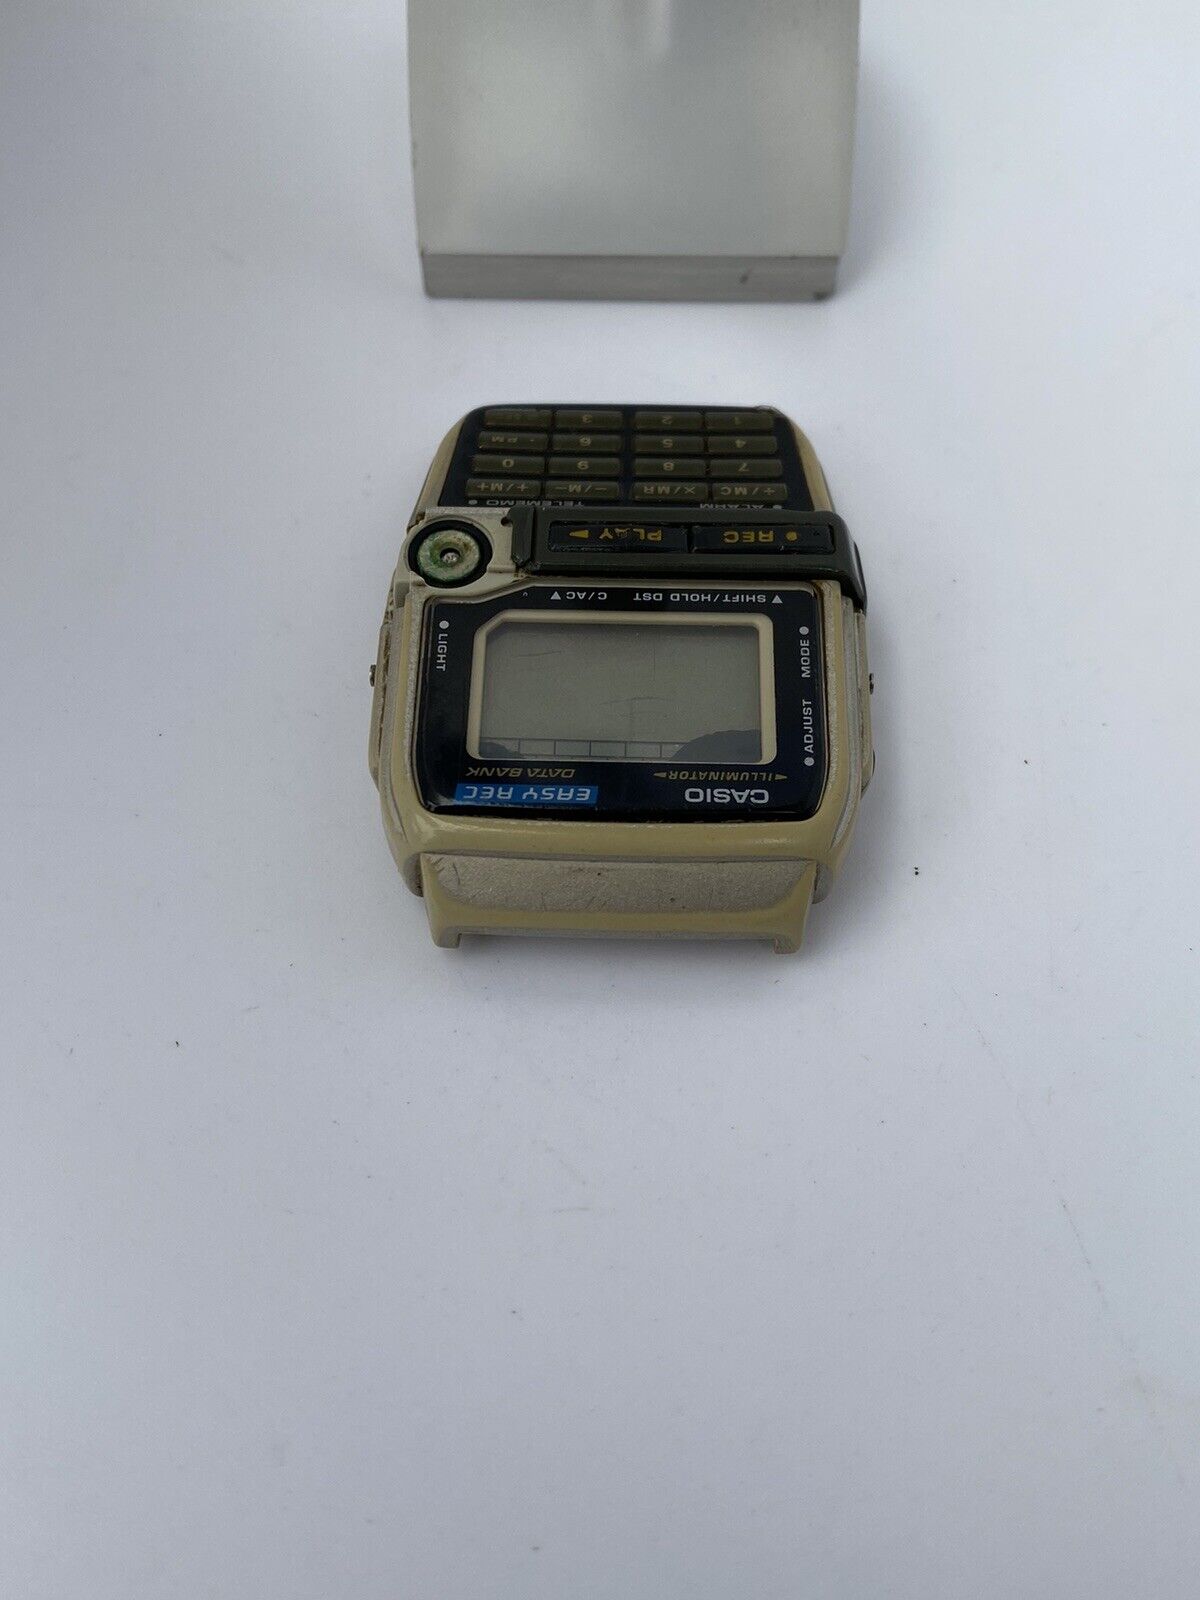 Casio DBC-V500 Easy Rec Data Bank Wrist Watch Telememo Calculator FOR PARTS